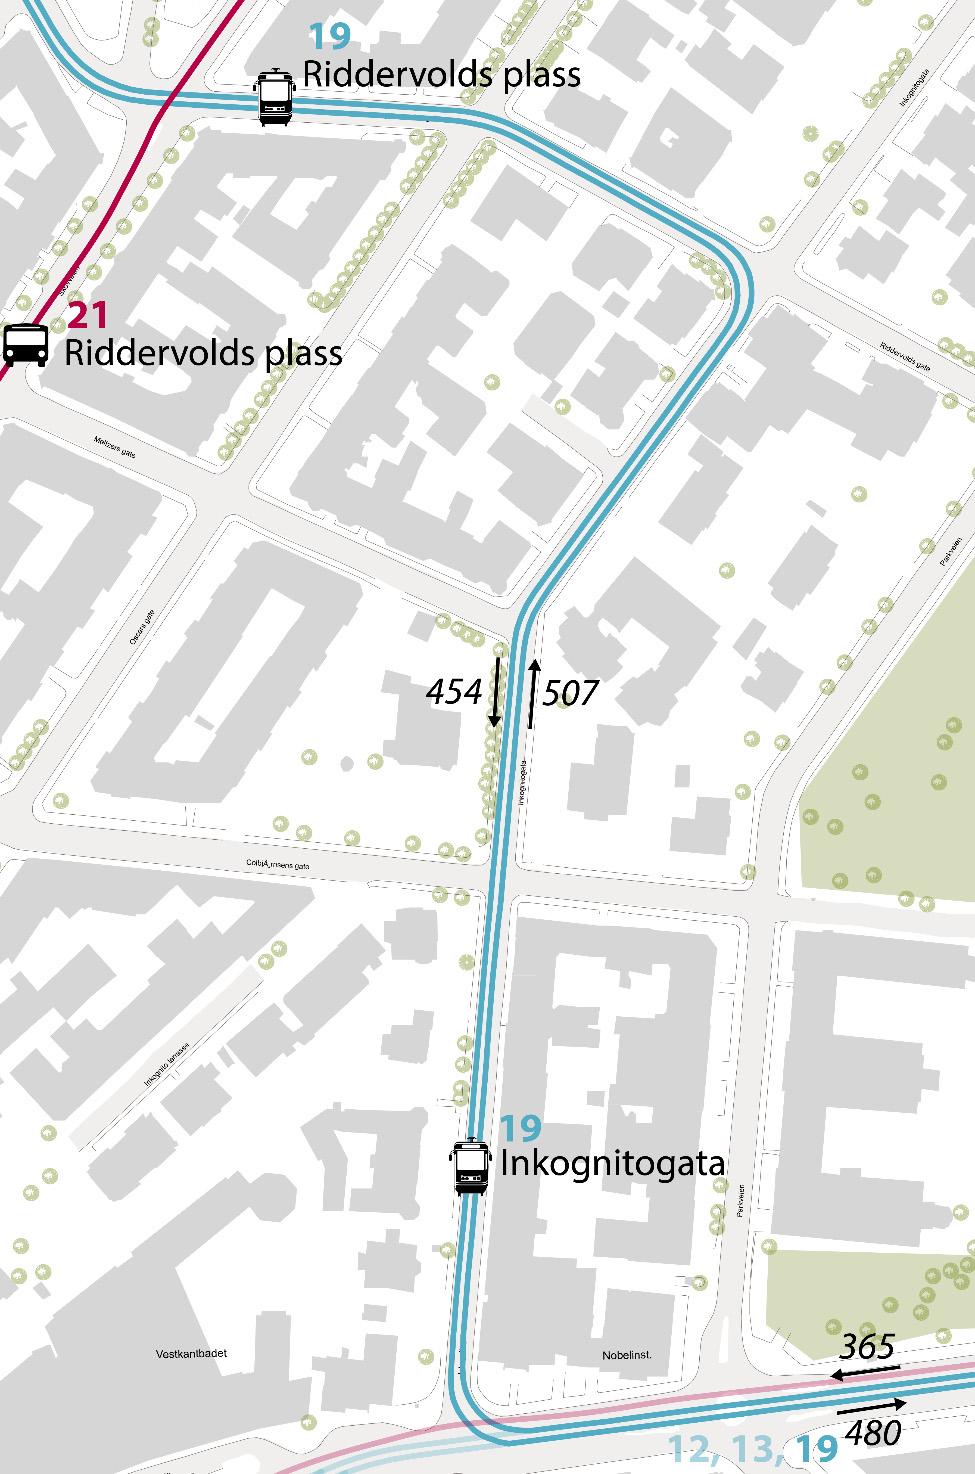 2.3 KOLLEKTIVTRAFIKK I dag går trikkelinje 19 (Ljabru Majorstuen) fra Henrik Ibsens gate, via Inkognitogata og Riddervolds gate (se Figur 2.2).